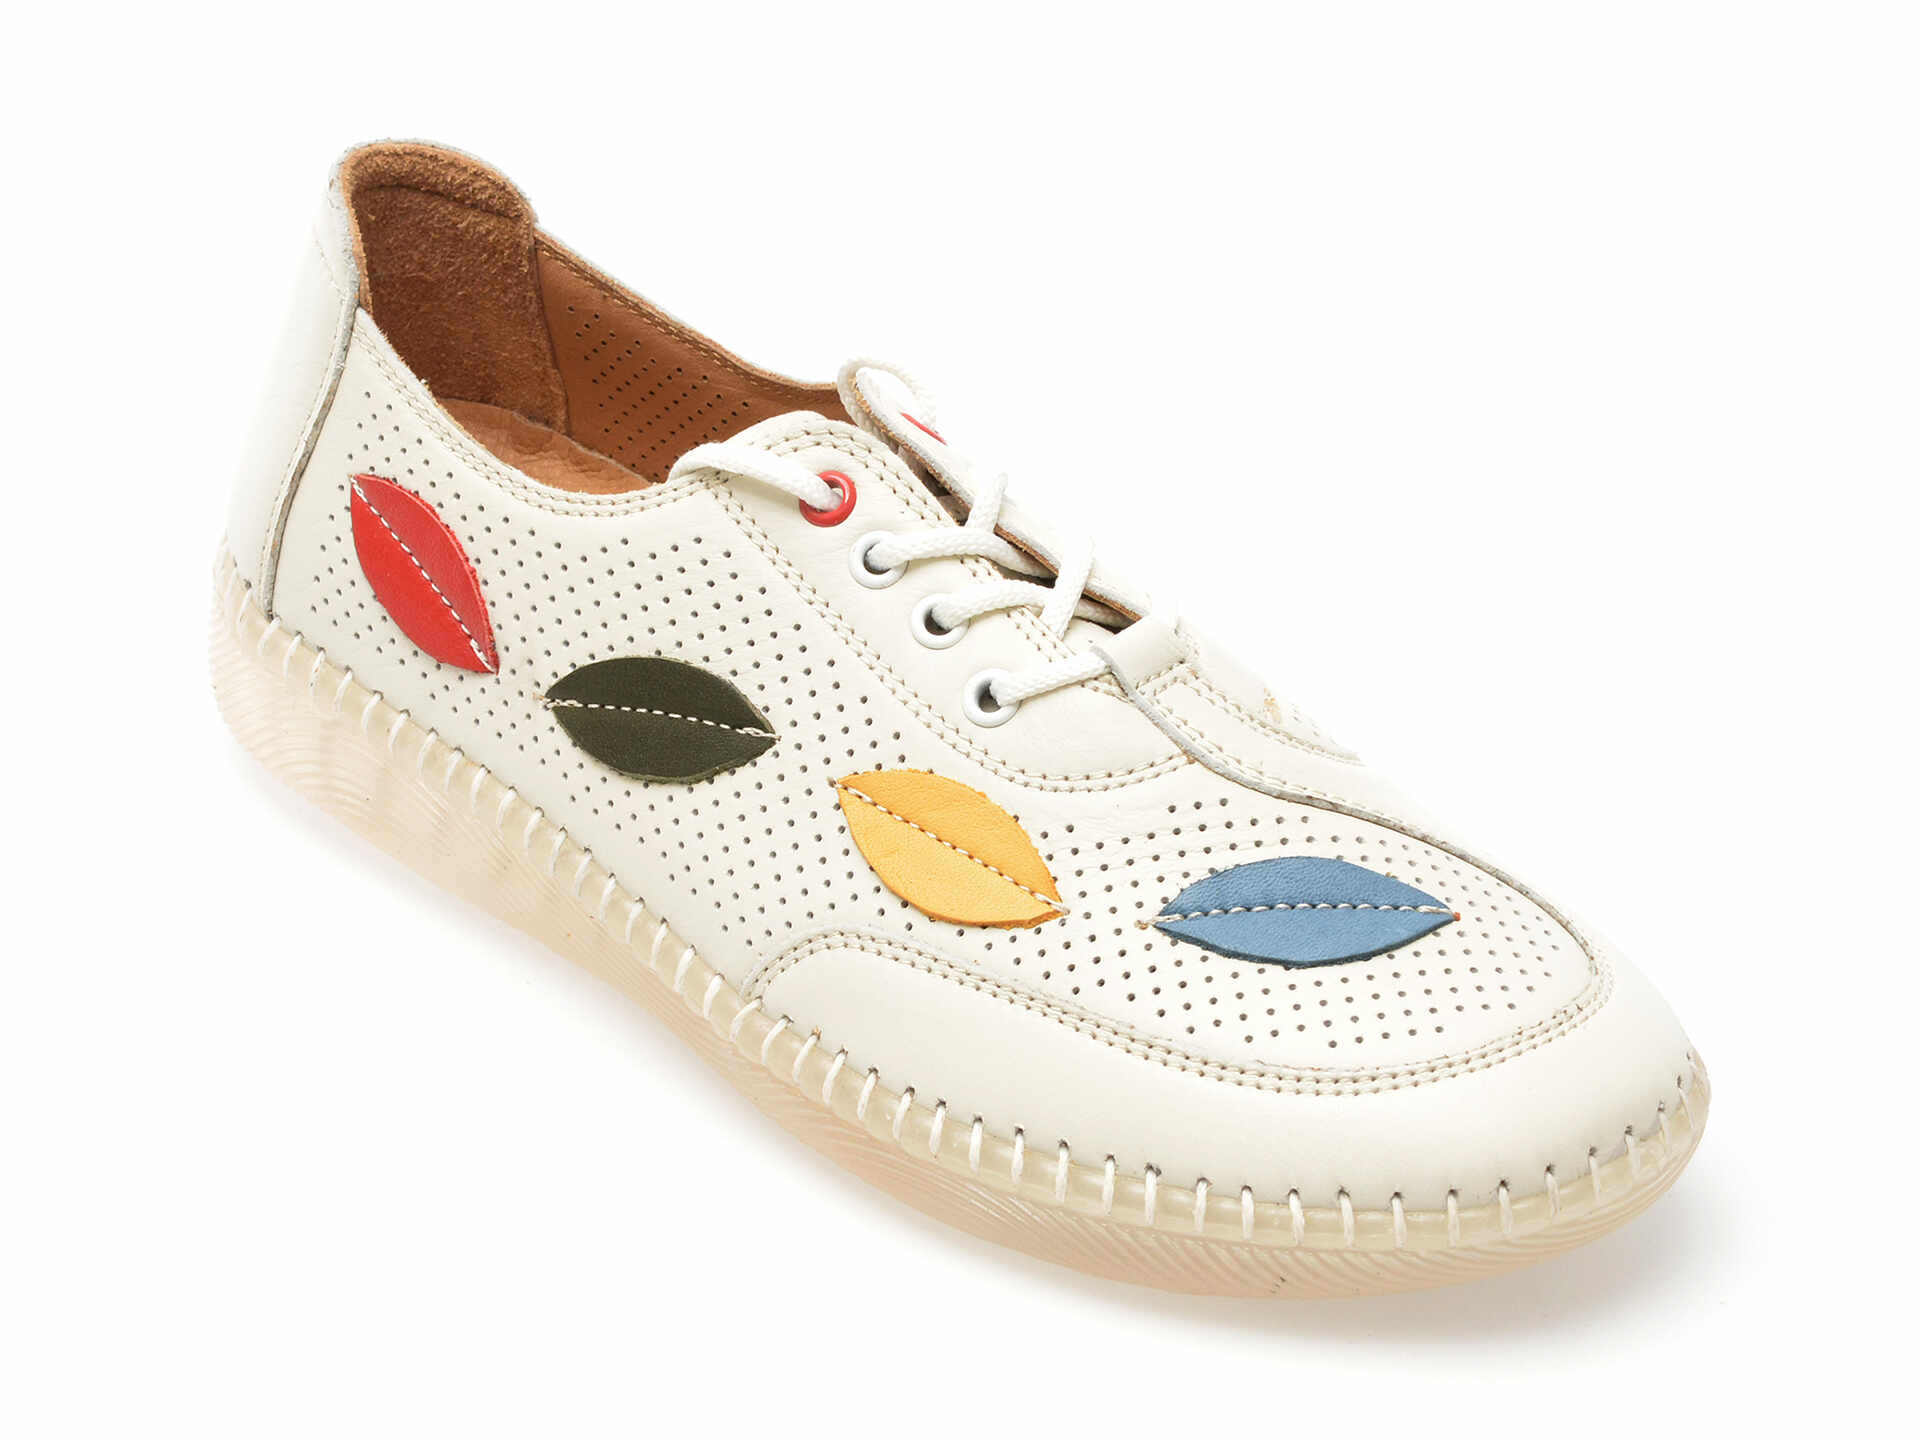 Pantofi OZIYS albi, 22110, din piele naturala